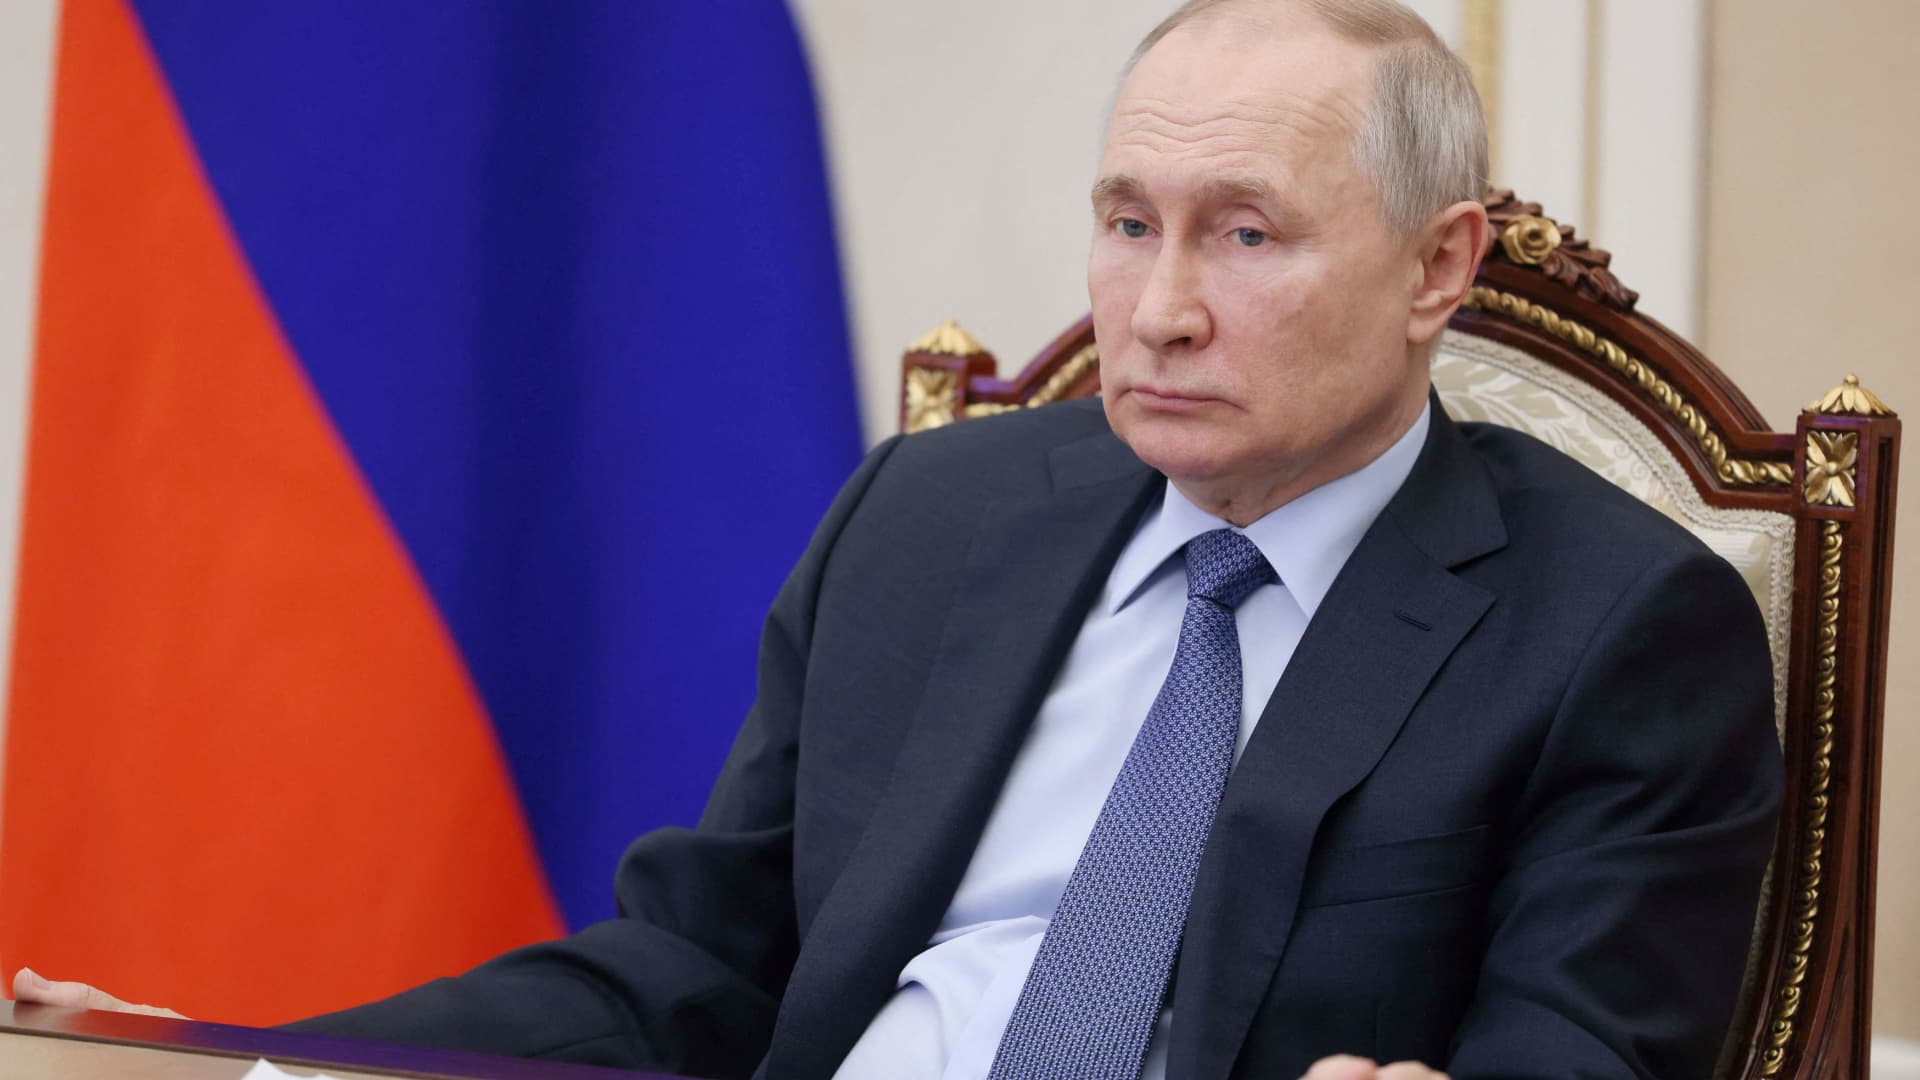 International Criminal Court issues arrest warrant for Vladimir Putin – NewsEverything Business